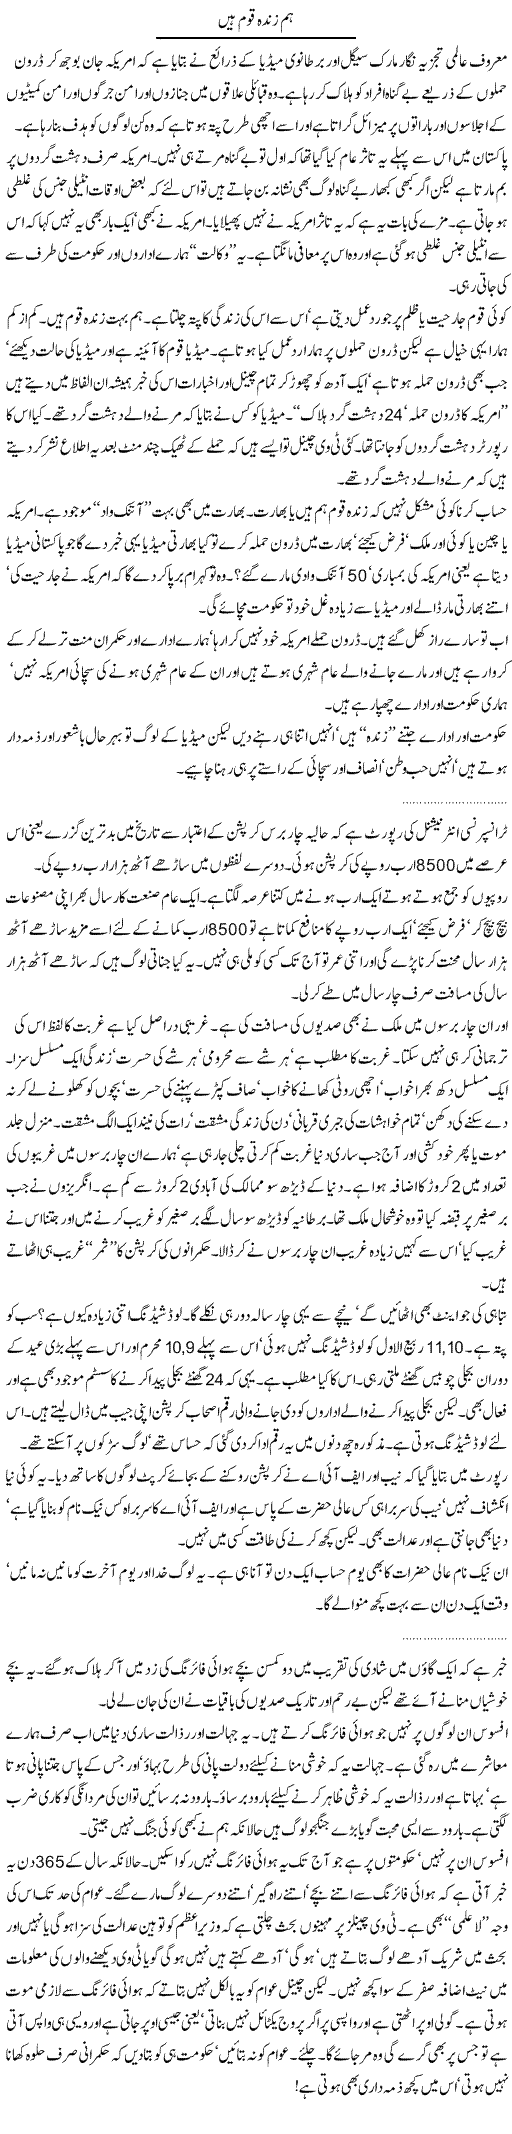 Drones and Corruption Express Column Abdullah Tariq 7 February 2012